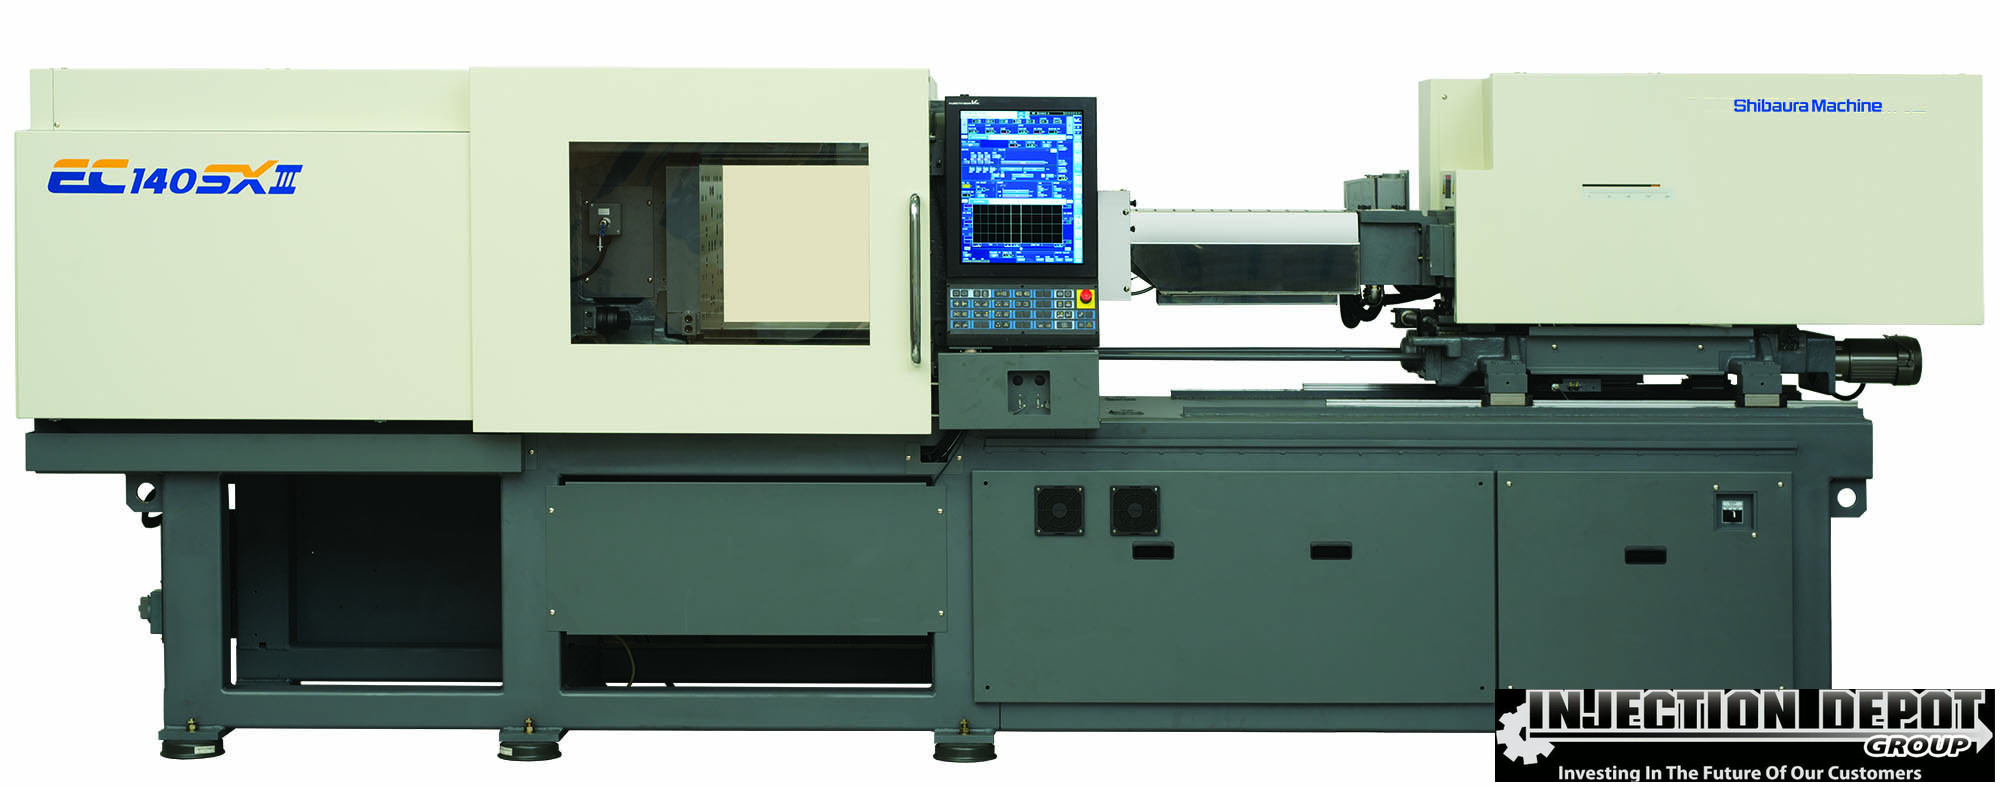 SHIBAURA MACHINE EC140SXIIIV70-U34 2Y Horizontal Injection Moulding Machines | INJECTION DEPOT GROUP